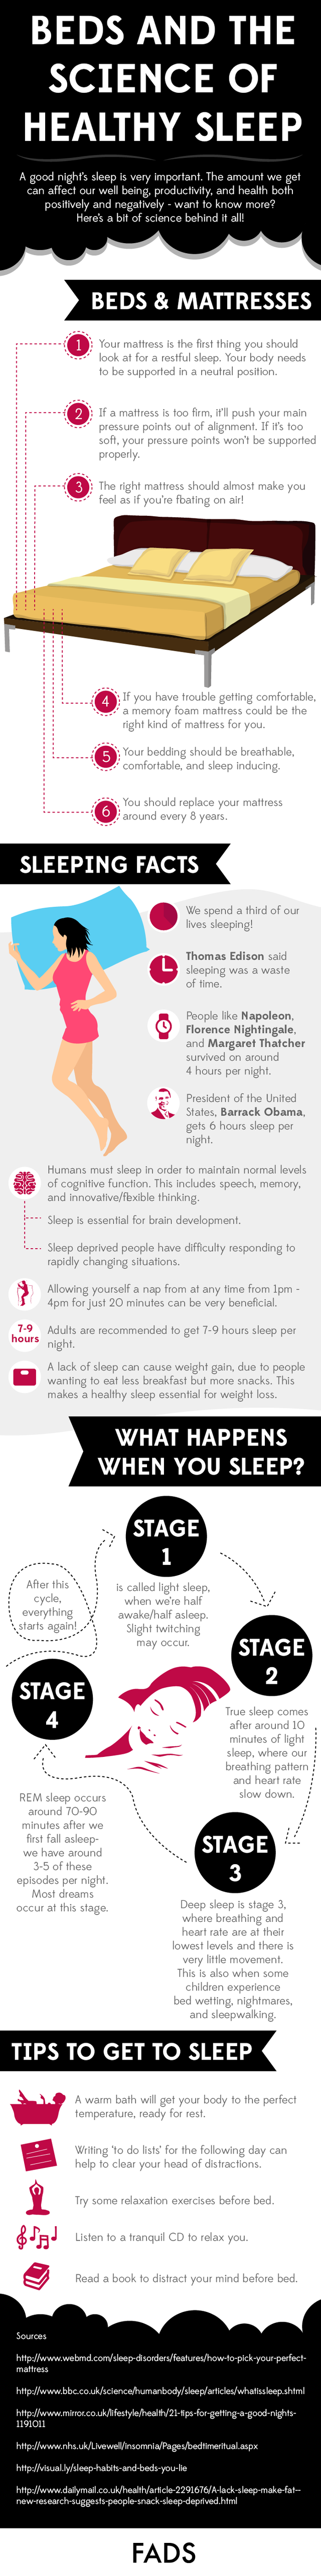 healthy-sleep-infographic.png